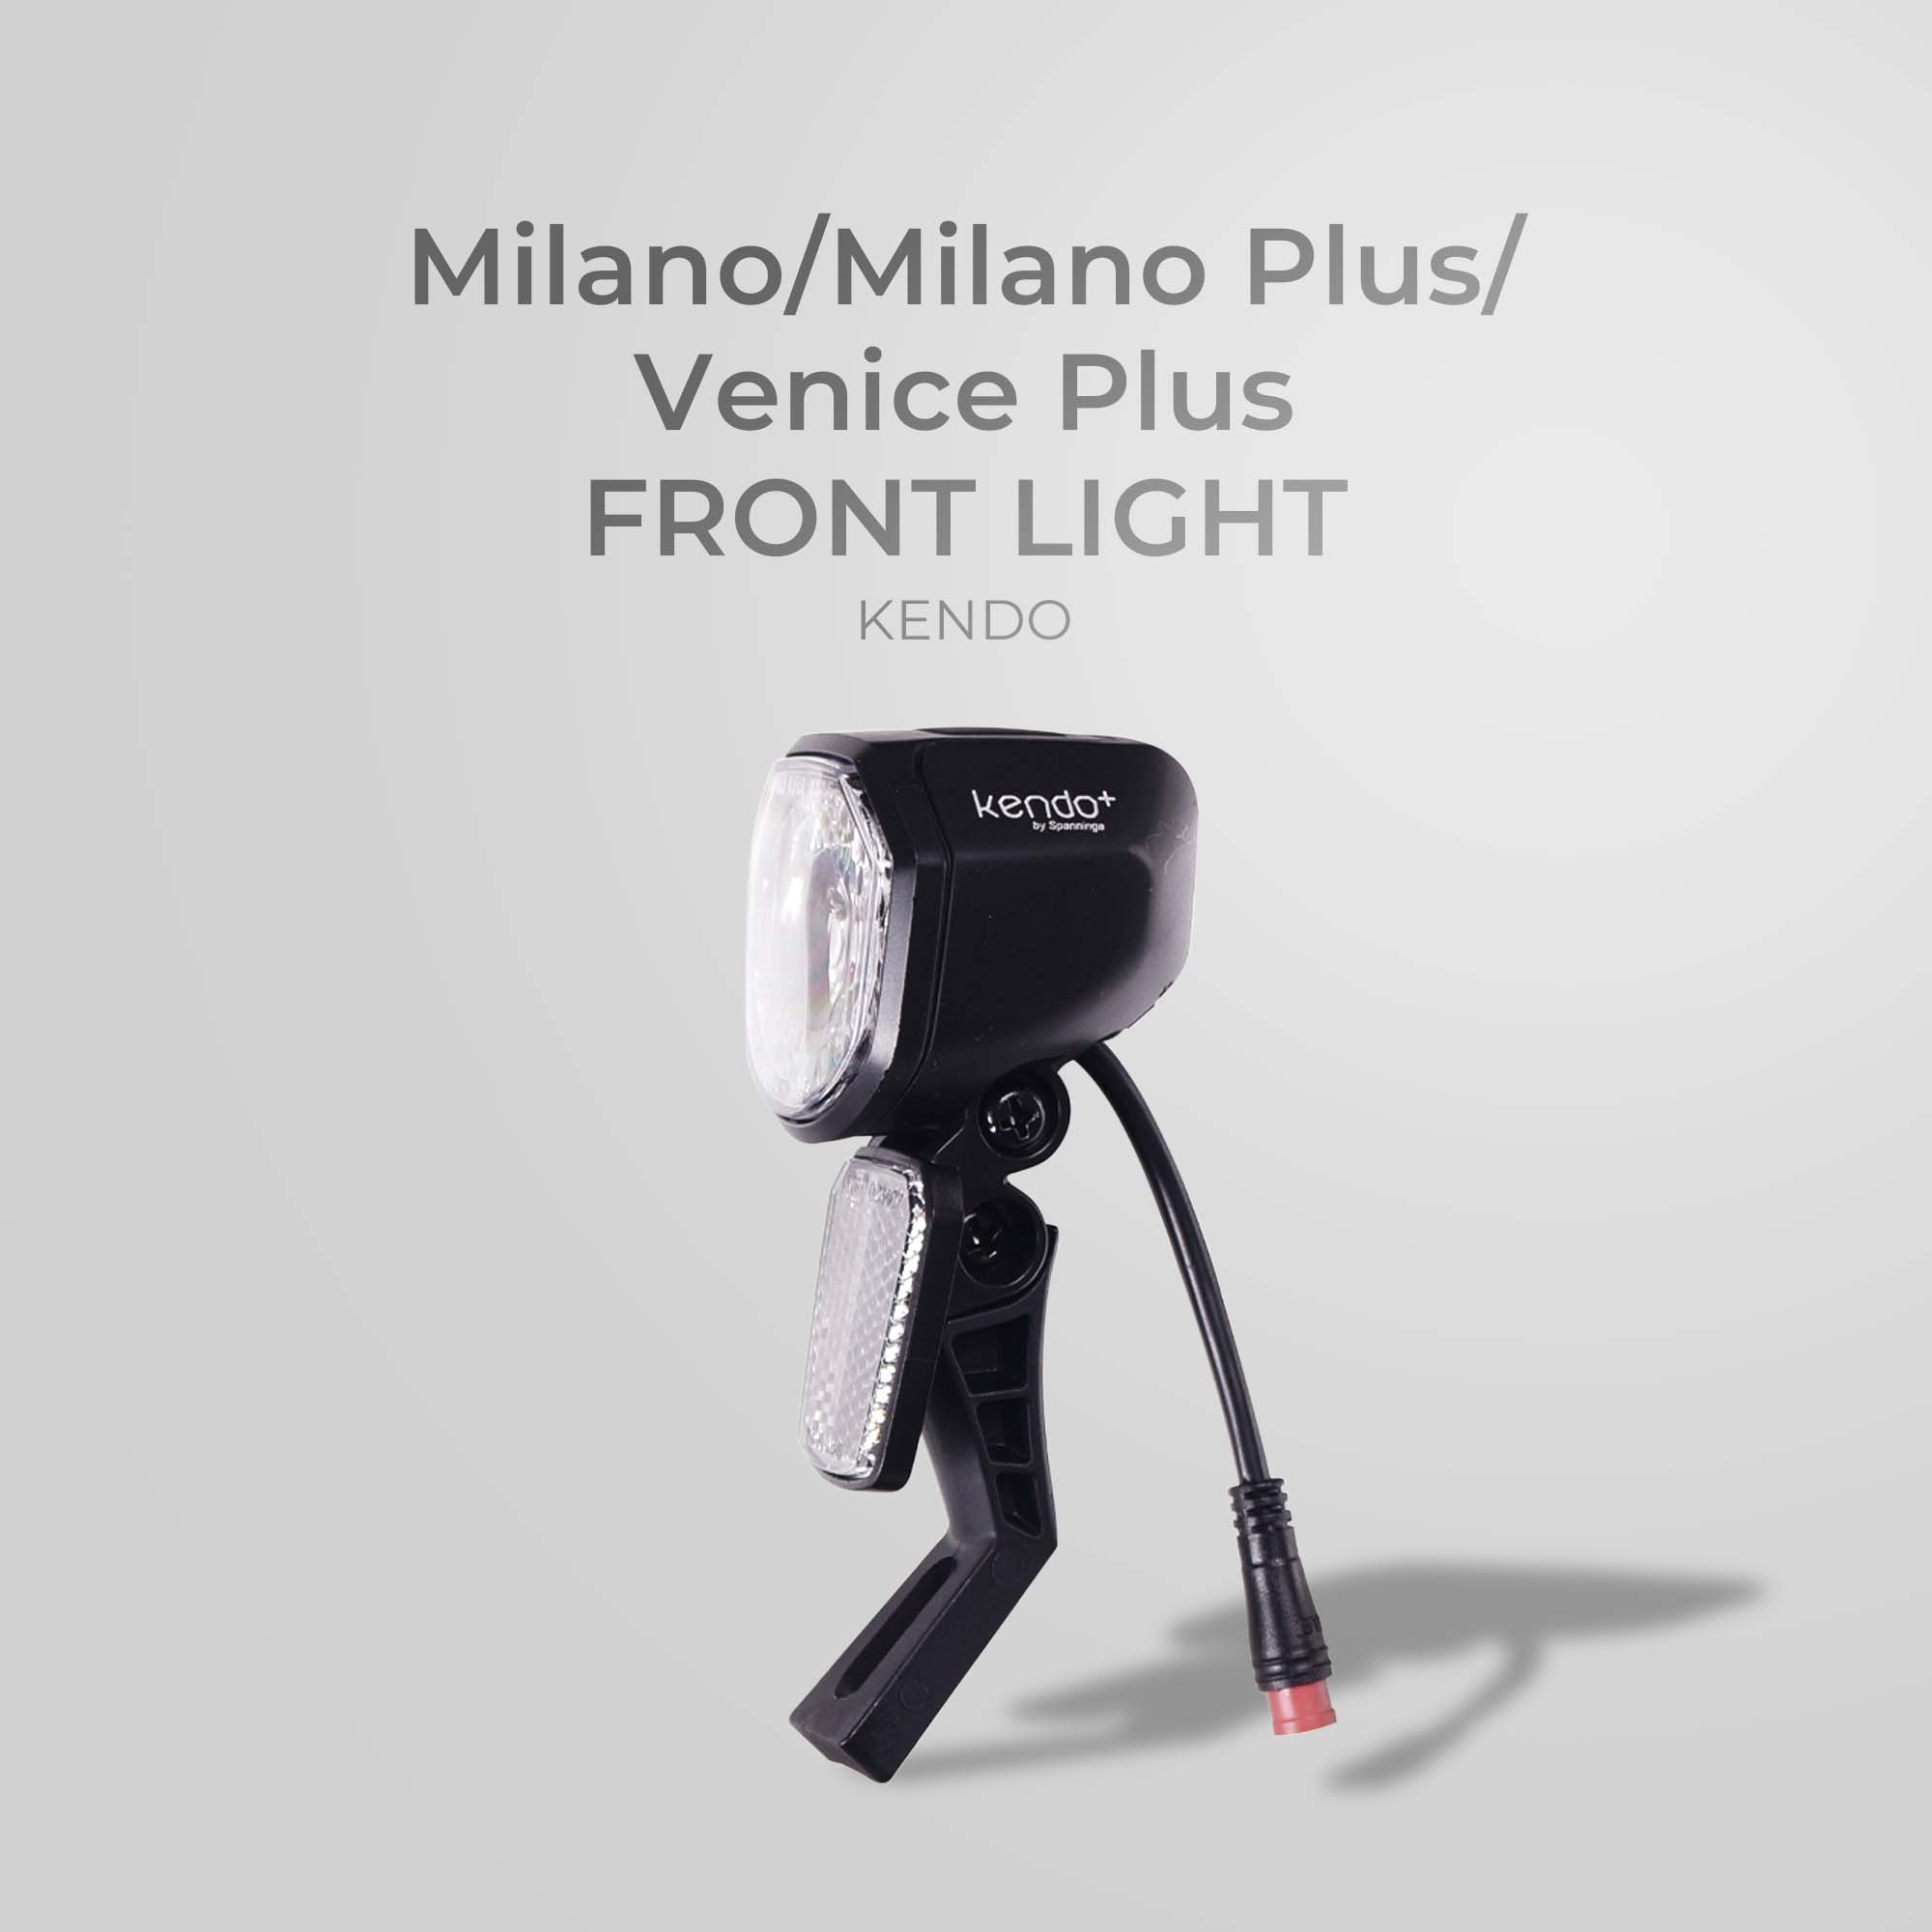 NCM Milano/Milano Plus/Venice Plus Front Light - KENDO